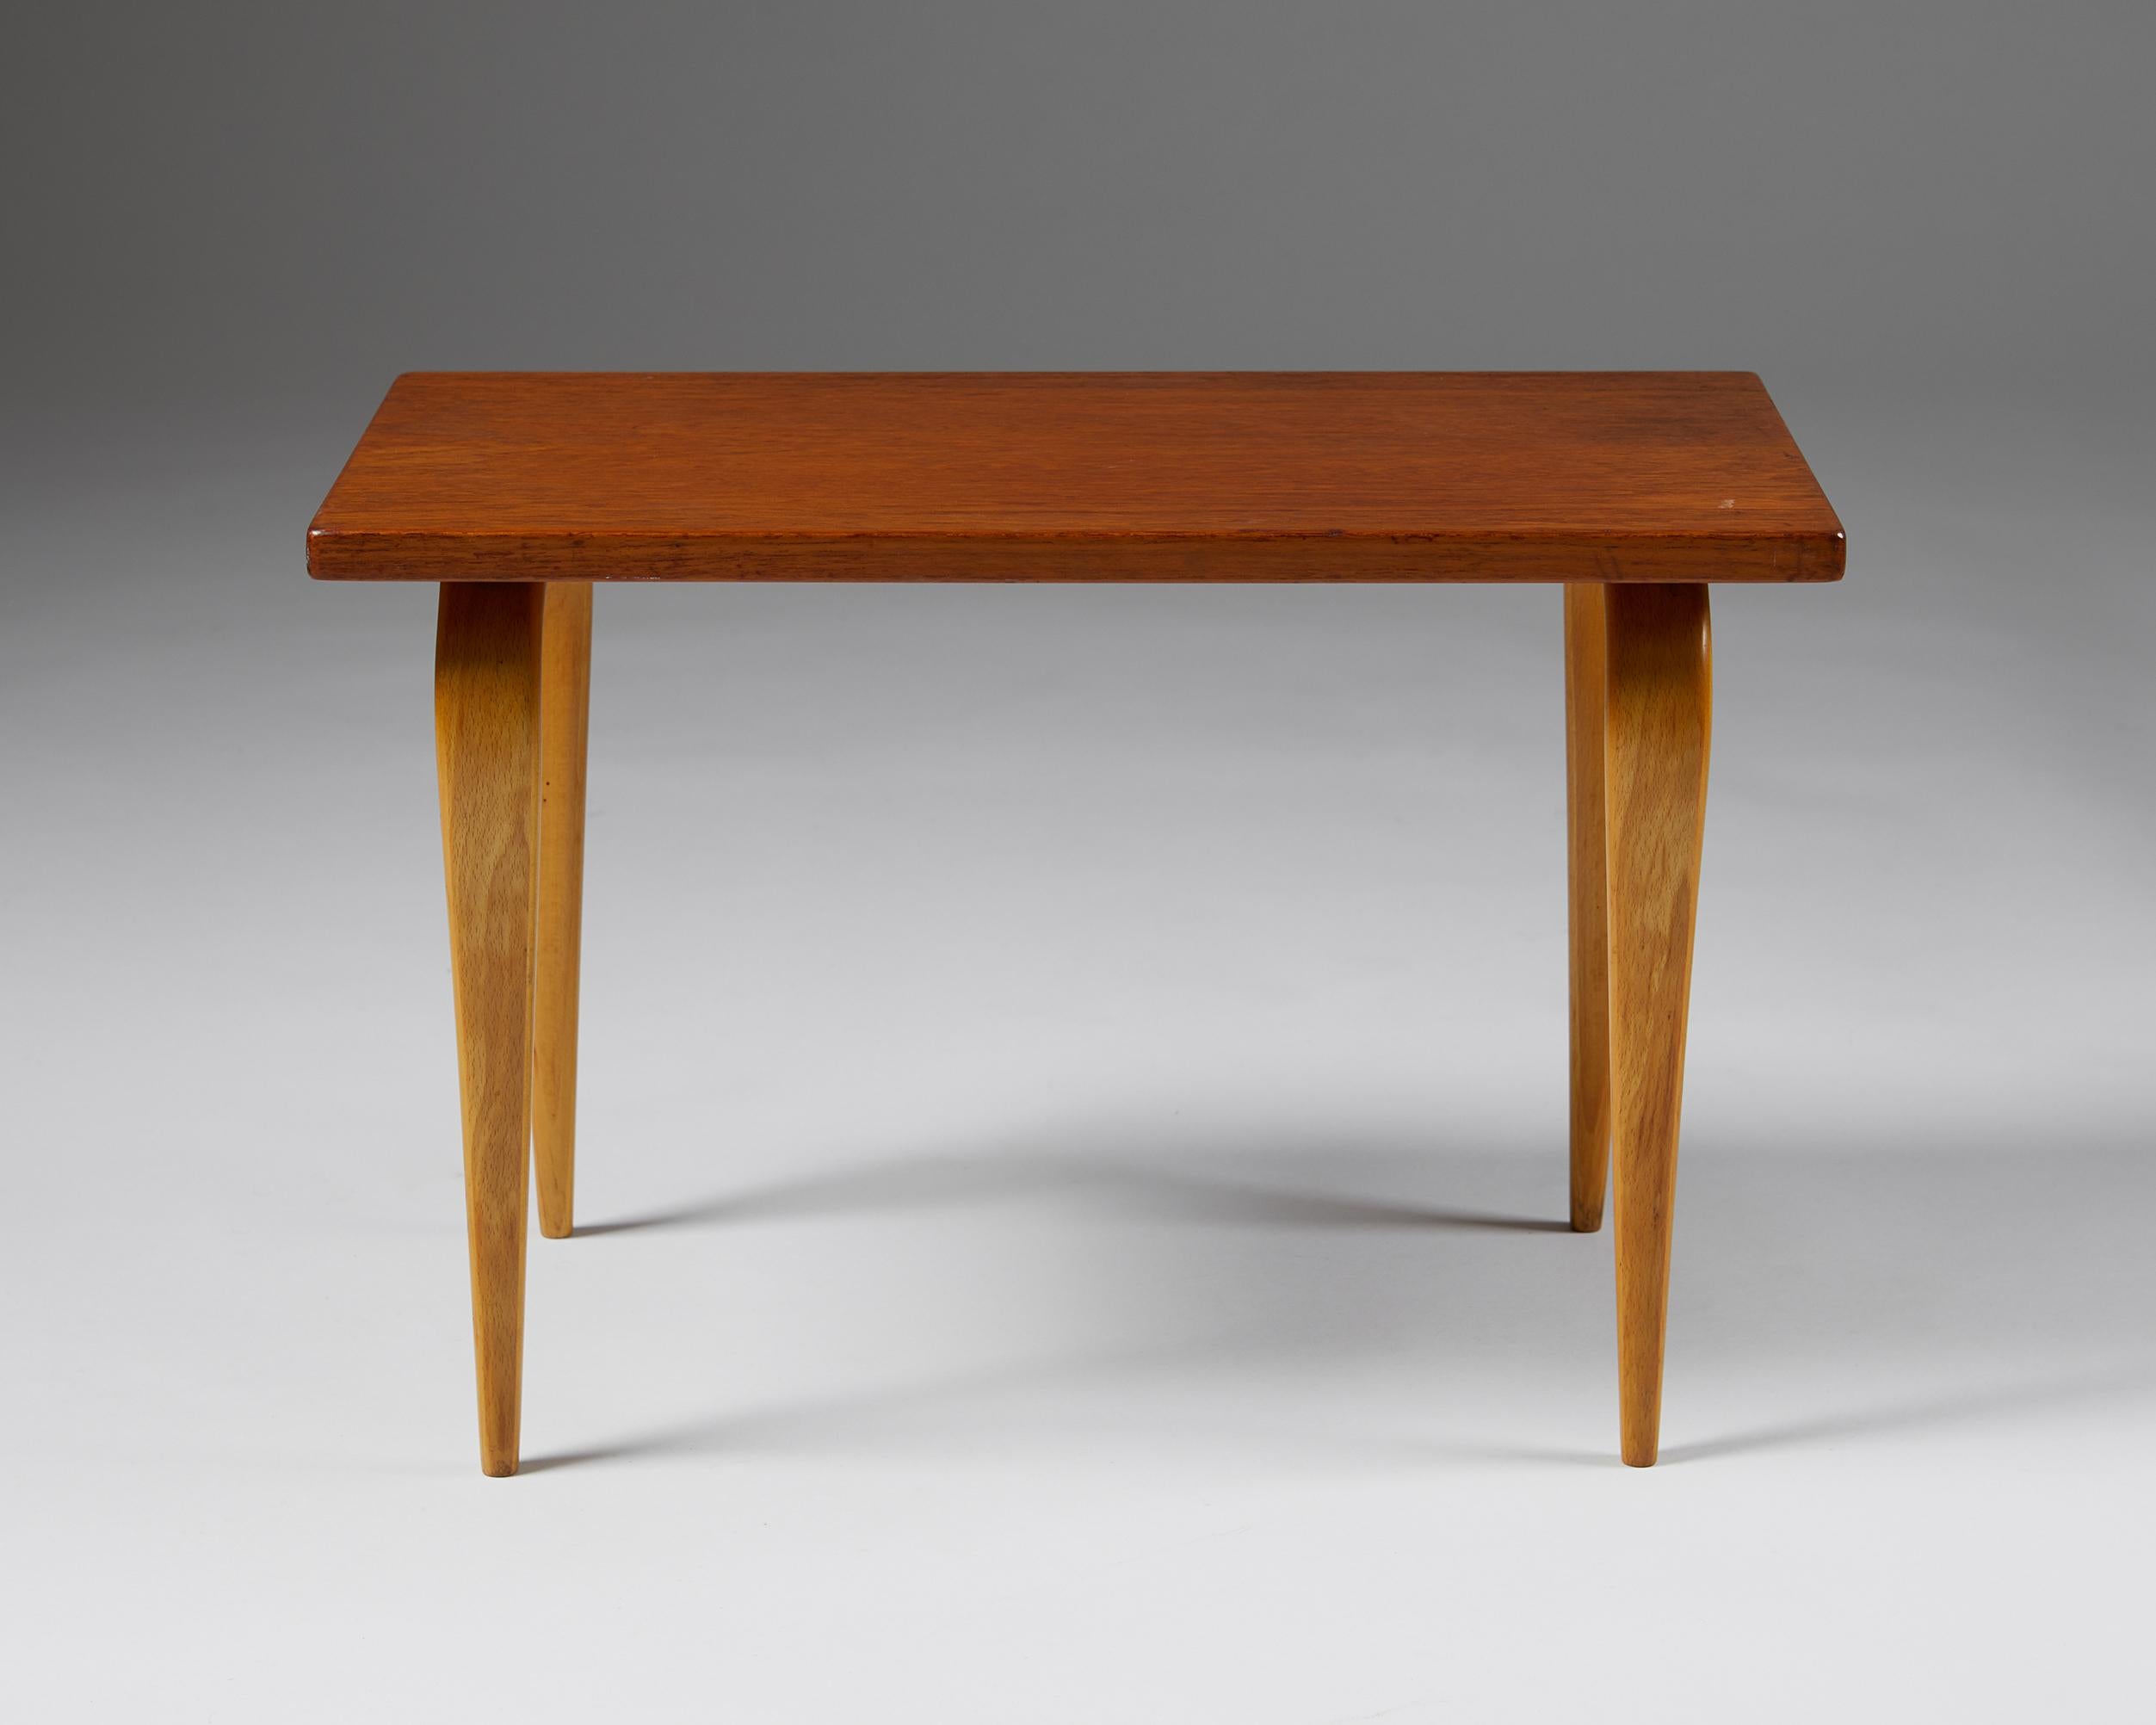 Swedish Table “Annika” Designed by Bruno Mathsson for Karl Mathsson, Sweden, 1950’s